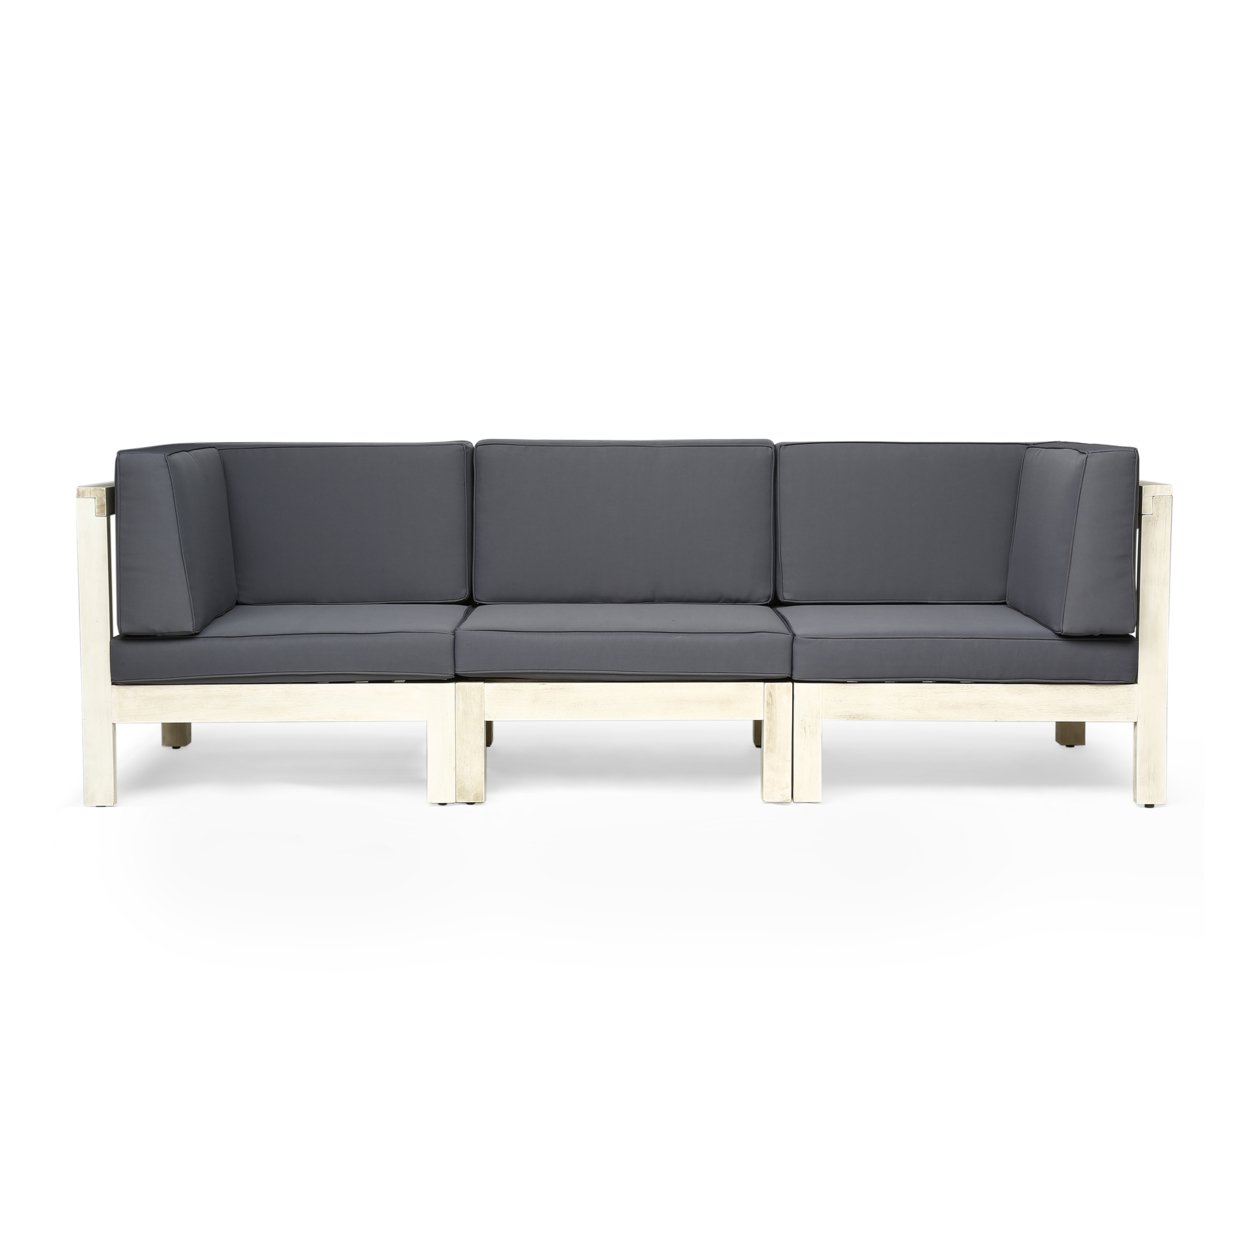 Brava Outdoor Modular Acacia Wood Sofa With Cushions - Weathered Gray + Dark Gray